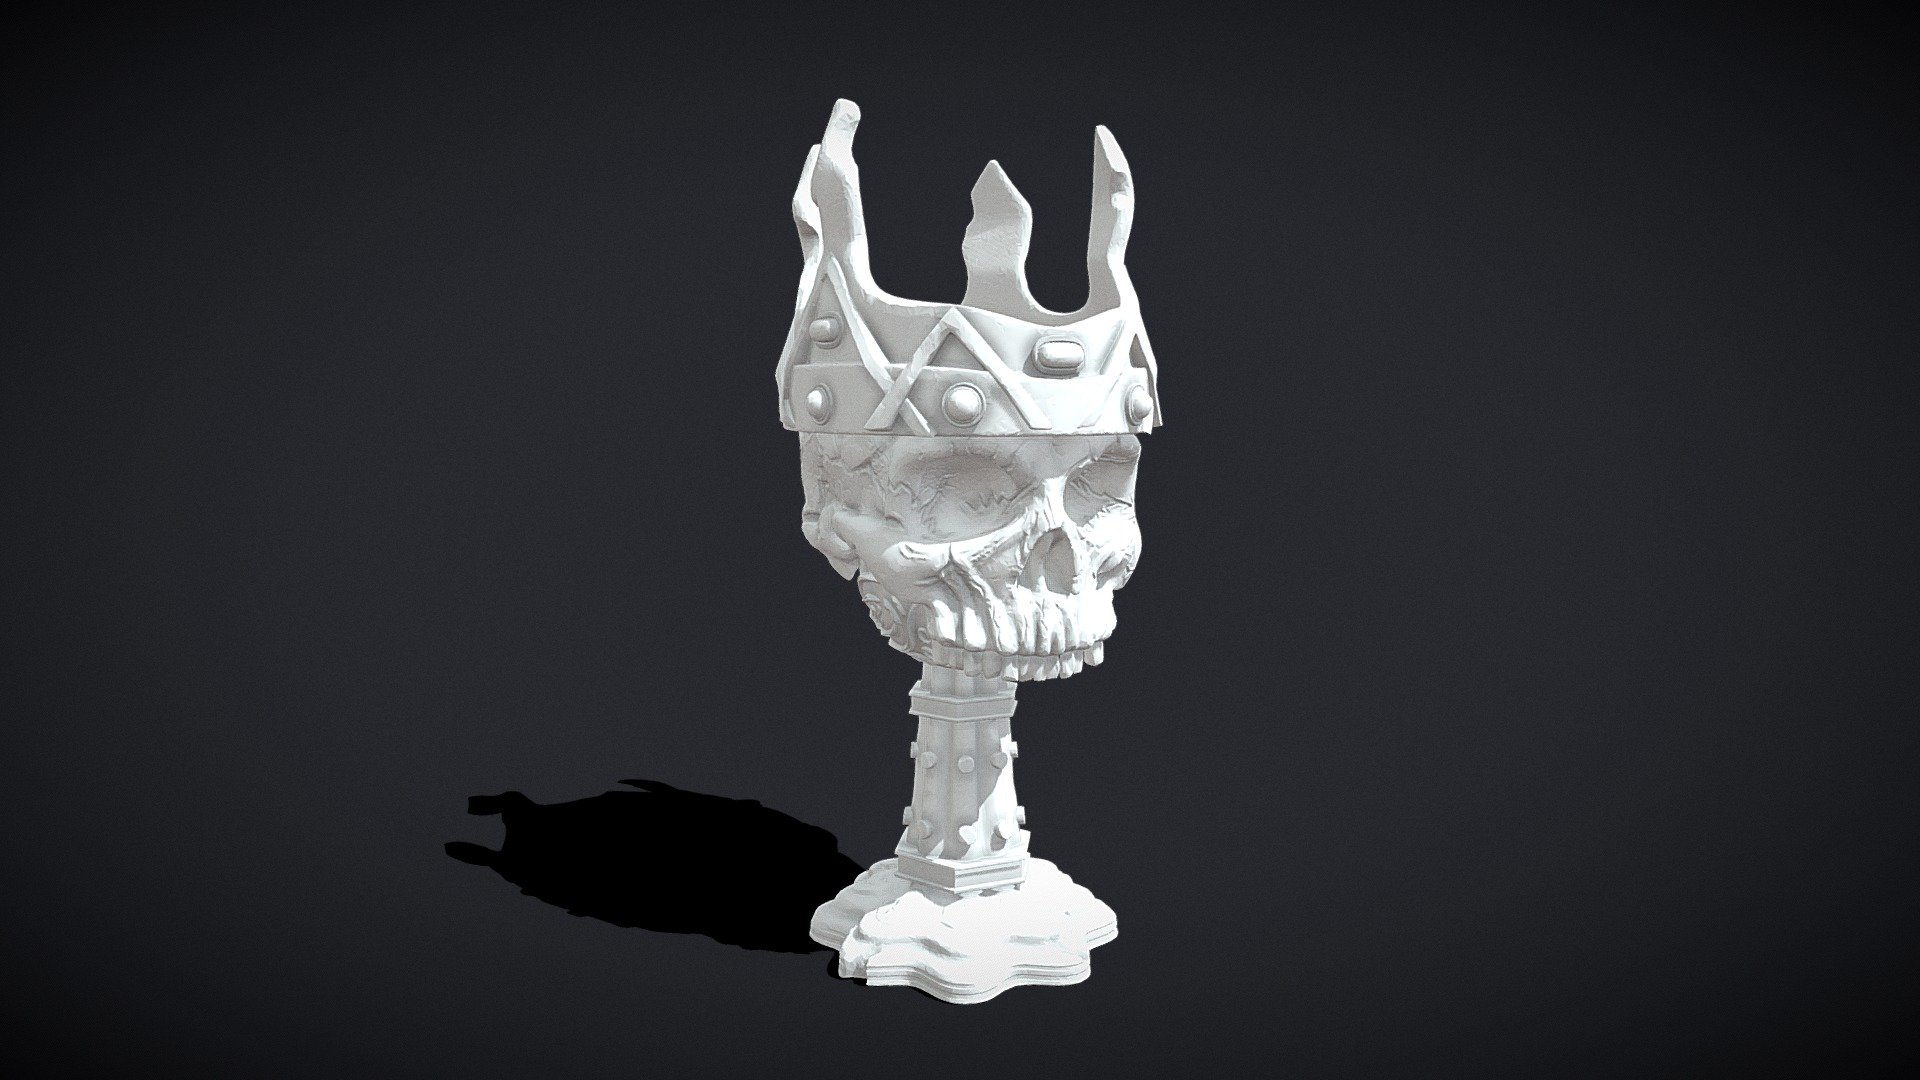 Skull Chalice 3D Print - Skull Chalice 3D Print - Buy Royalty Free 3D model by GetDeadEntertainment 3d model